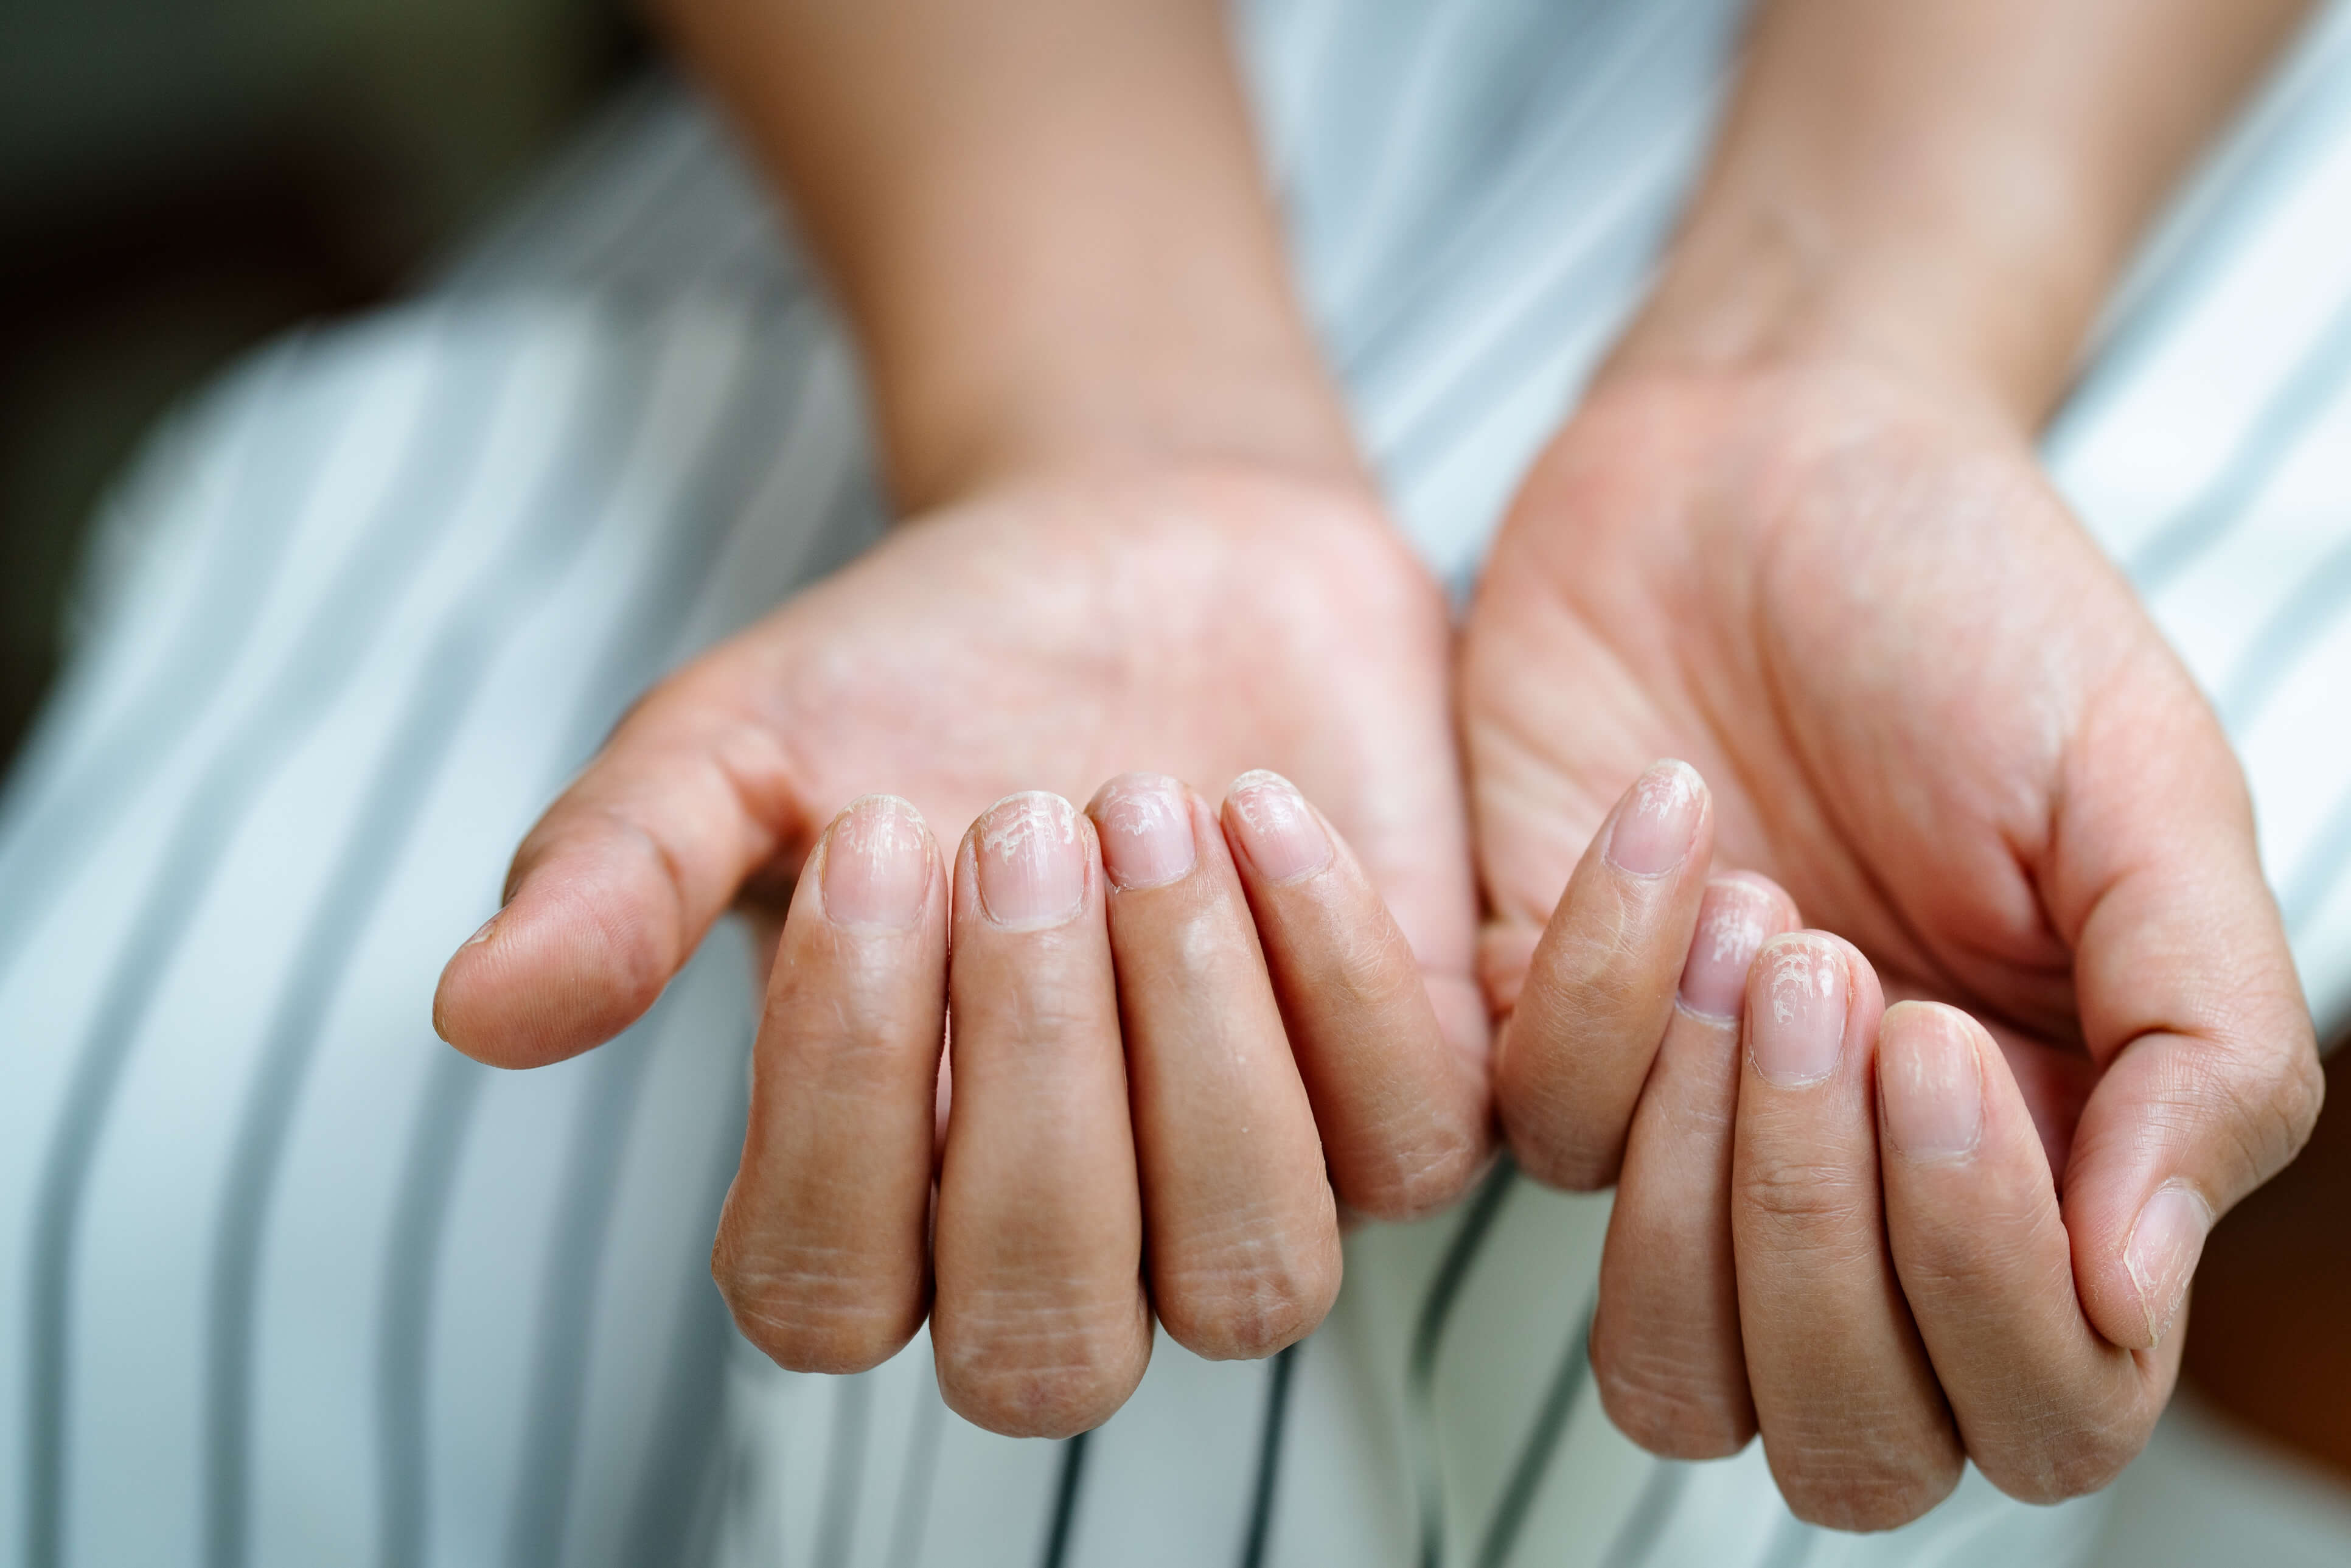 Nails: तुमची 'नखं' देतात गंभीर आजारांचे संकेत; ही लक्षणे दिसताच वेळीच व्हा  सावध! - Marathi News | Your nails give signs of serious illness as soon as  the symptoms appear Be careful |